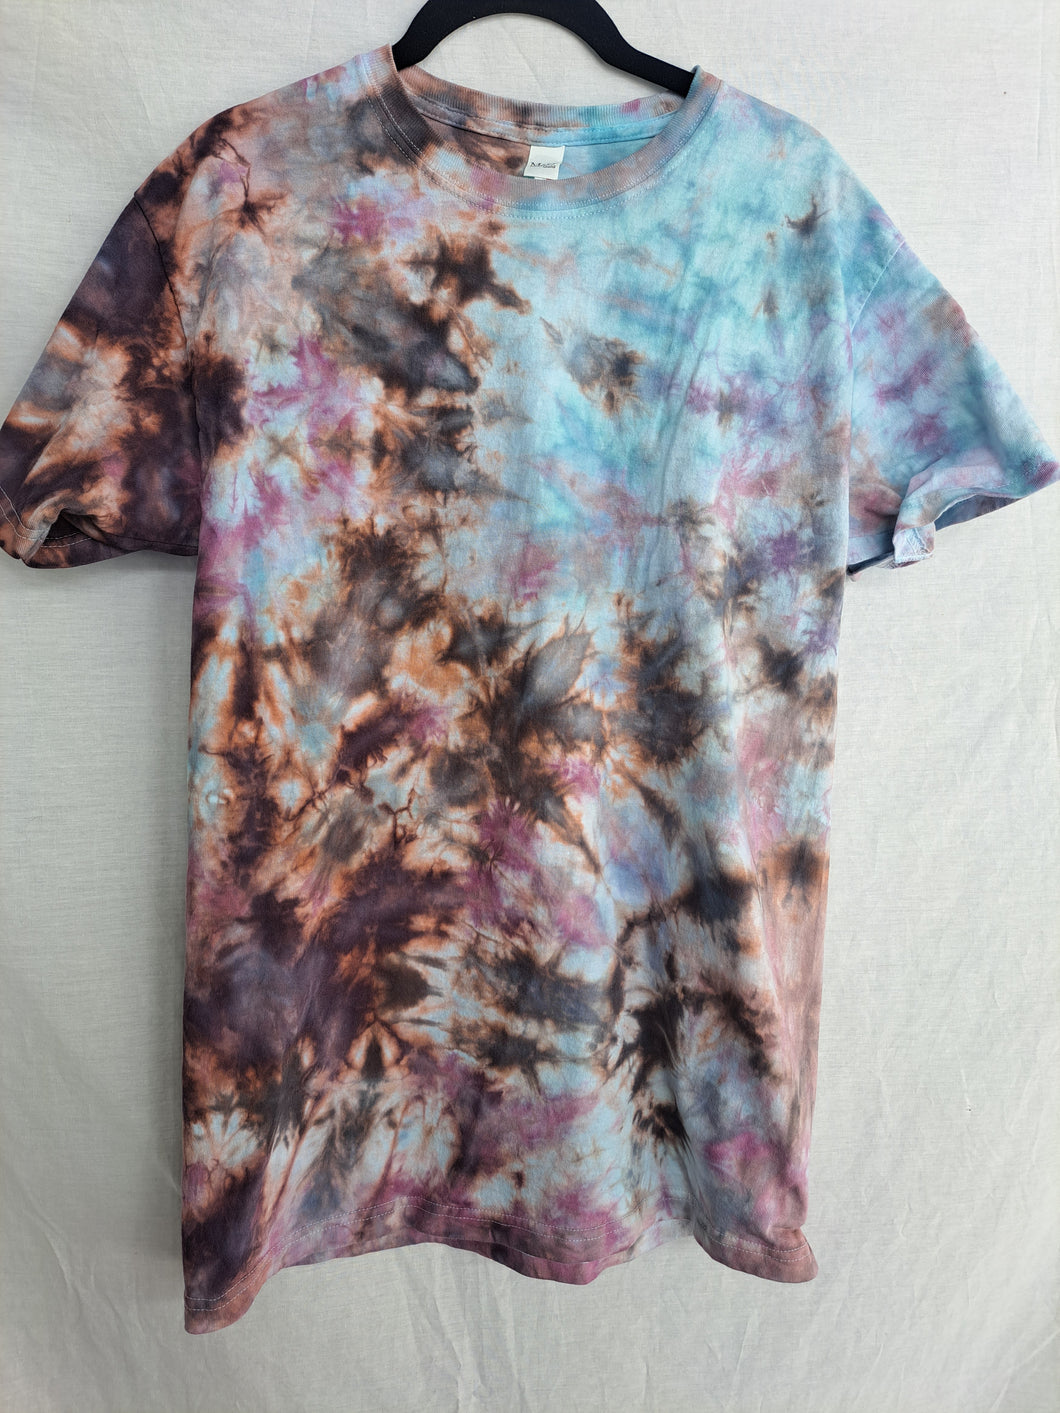 Organic cotton unisex t-shirt, size M